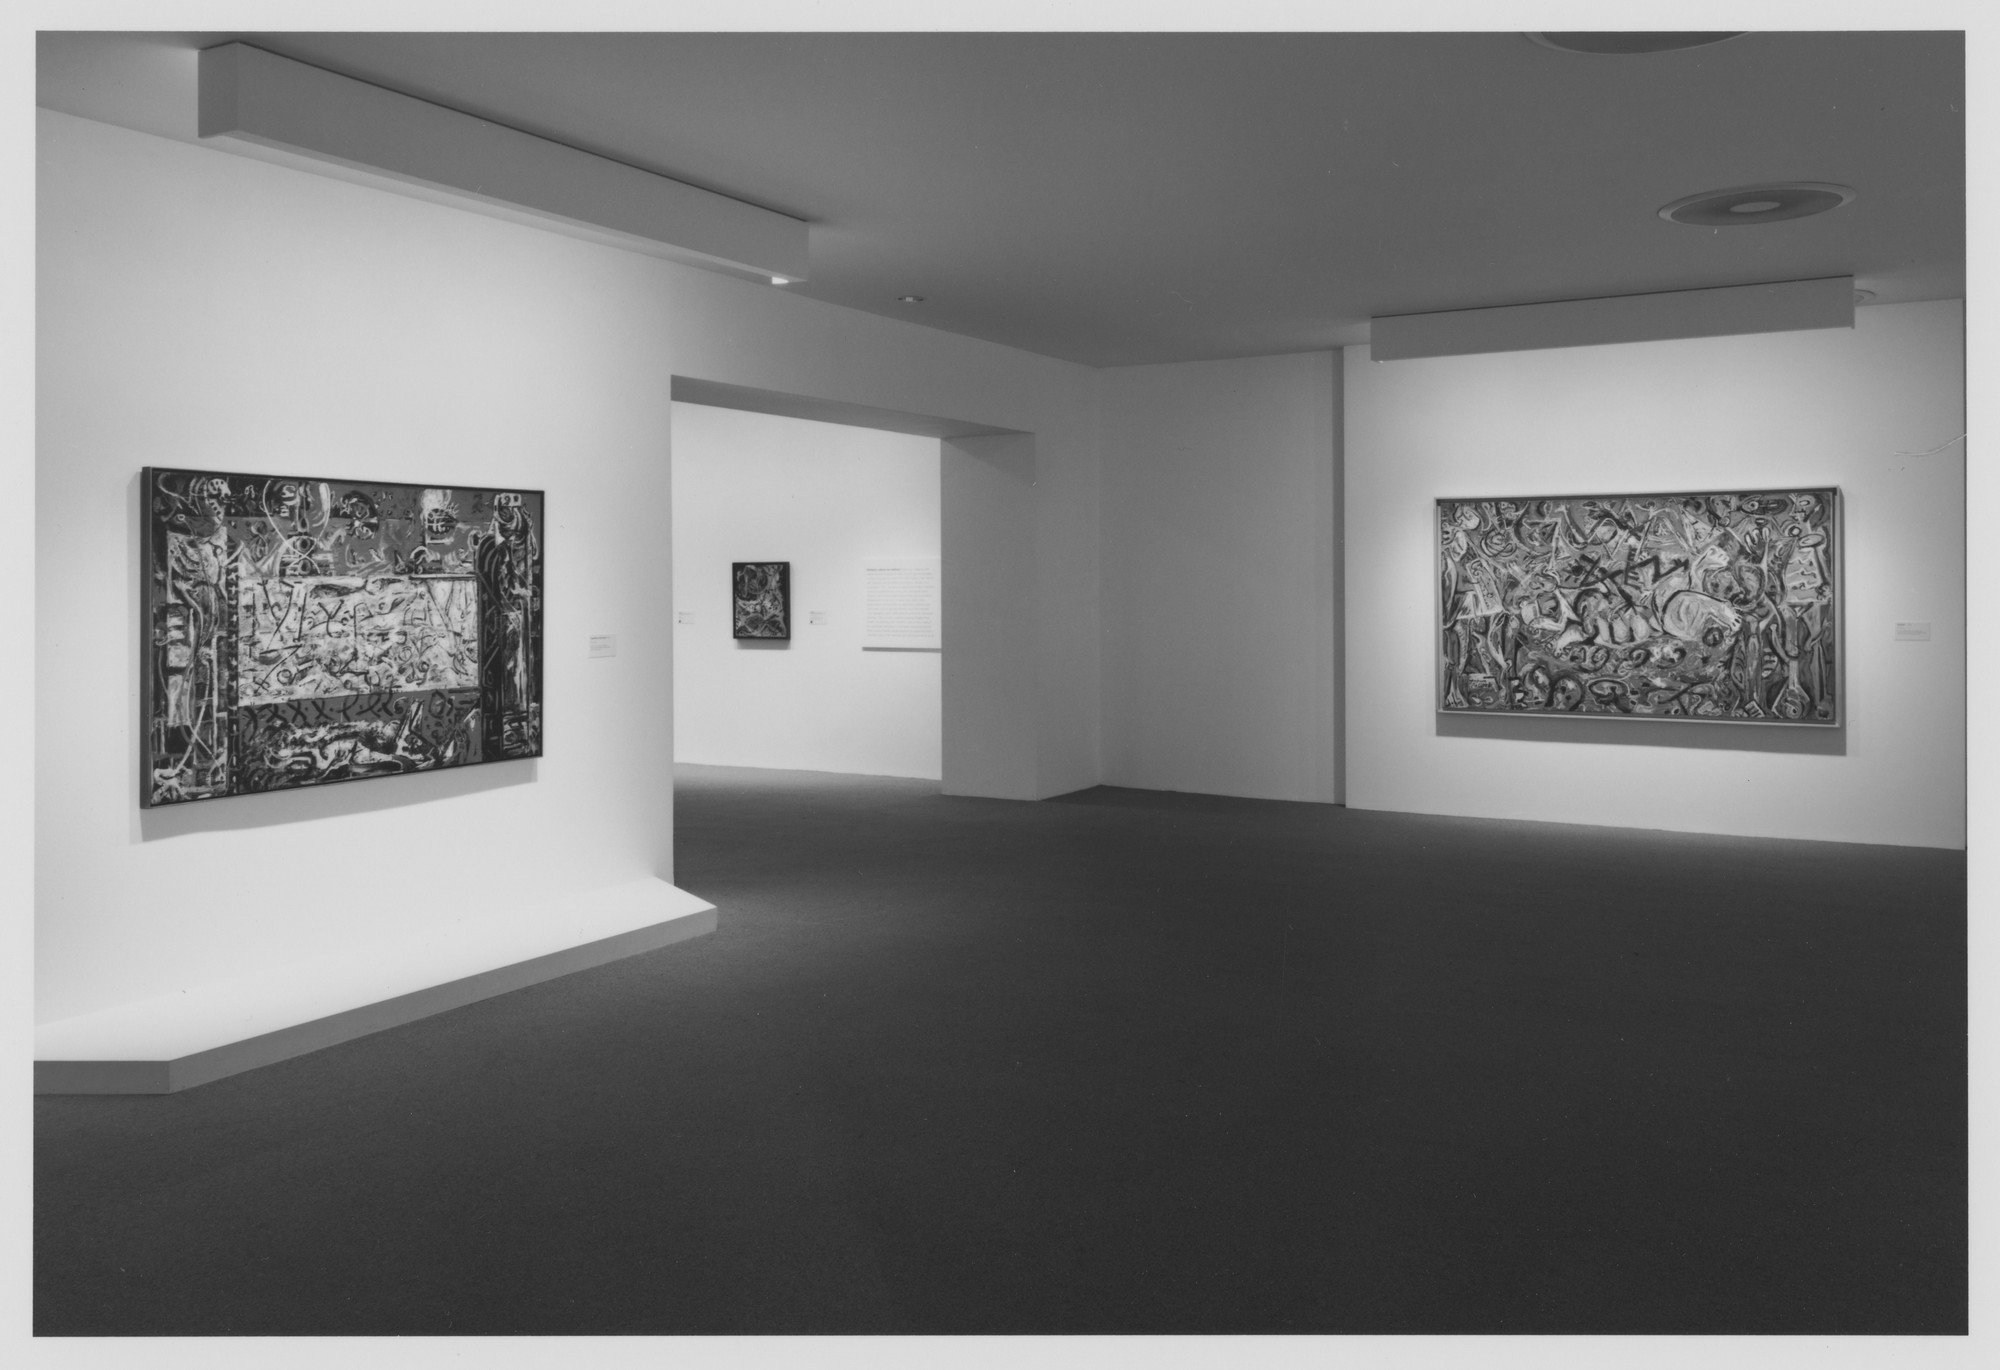 Installation view of the exhibition, "Jackson Pollock " MoMA